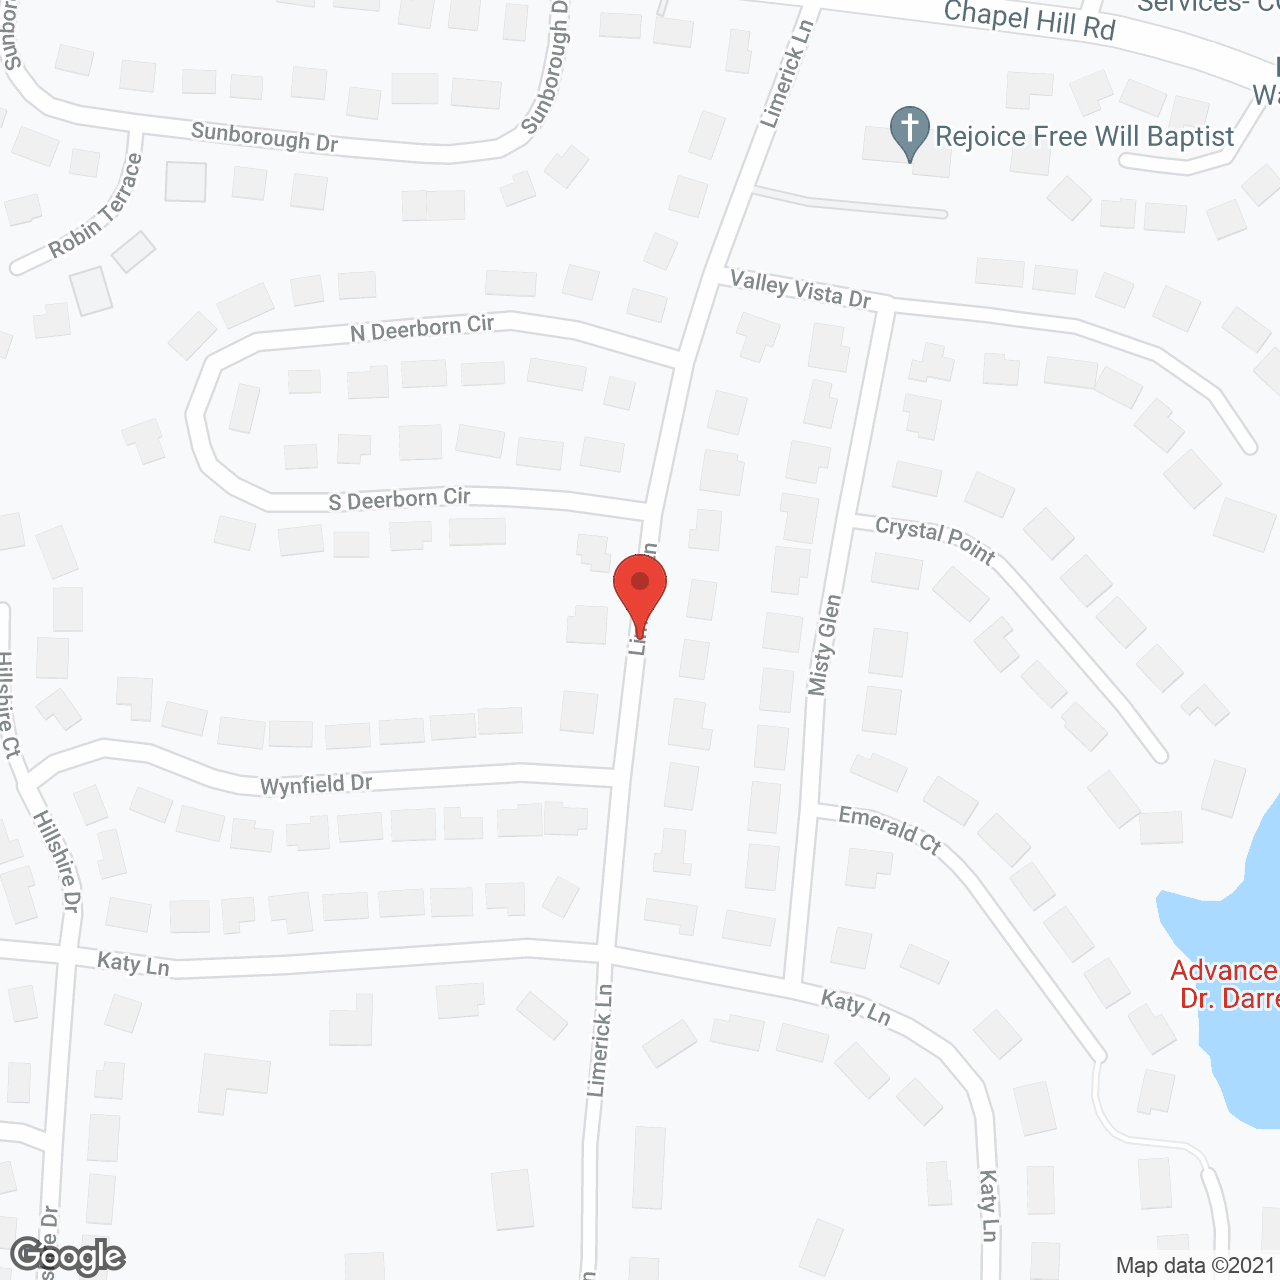 Cedarhurst of Columbia in google map